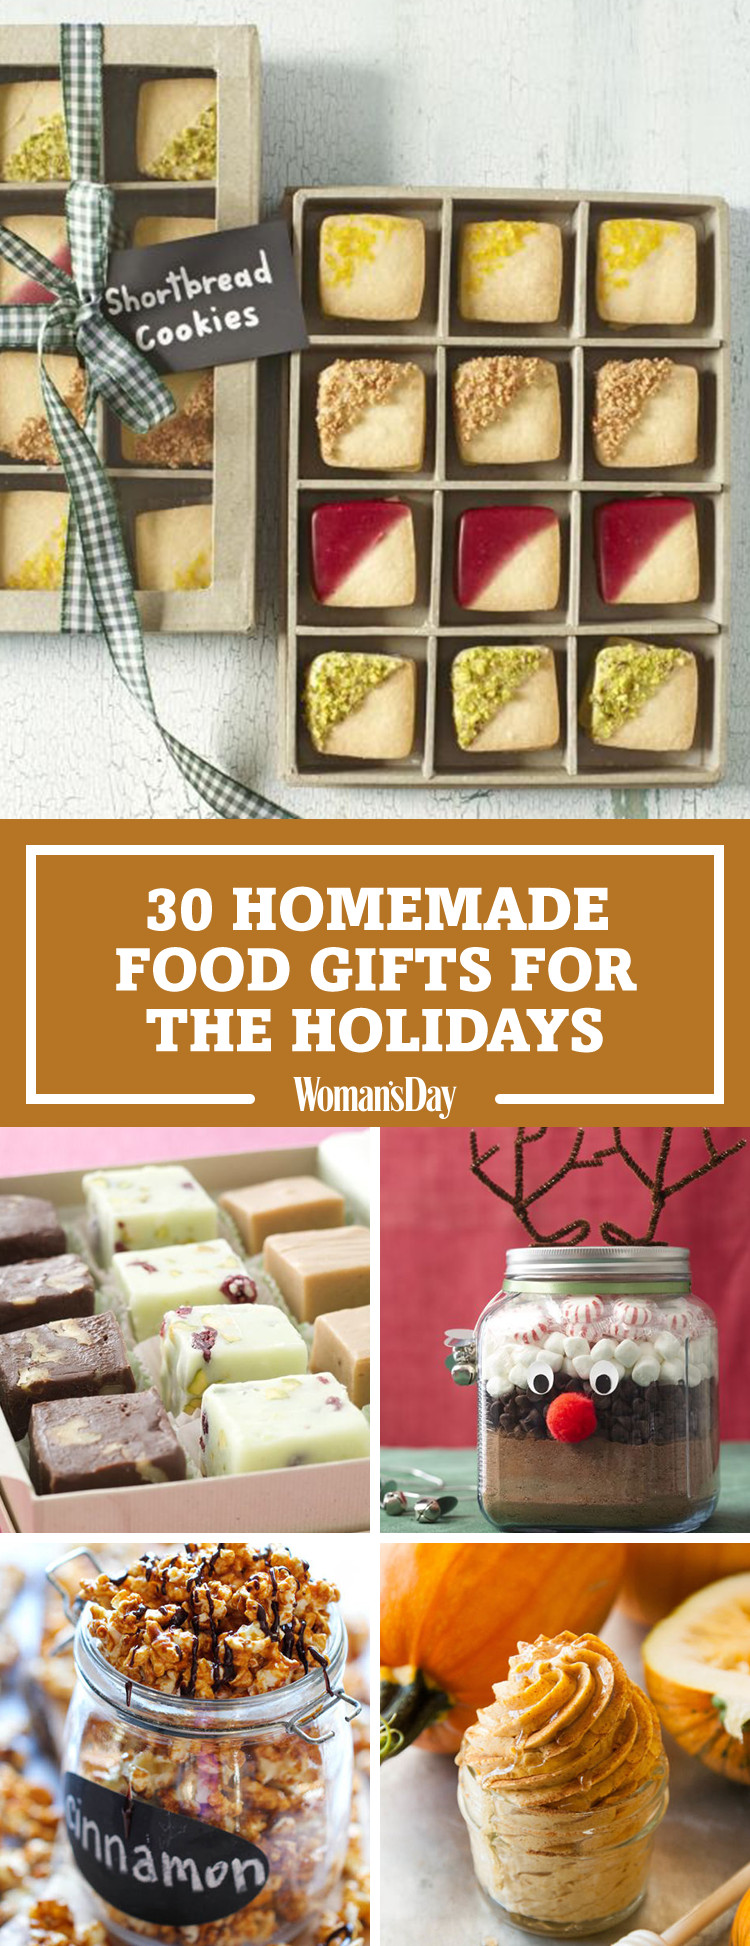 DIY Christmas Food Gifts
 35 Homemade Christmas Food Gifts Best Edible Holiday